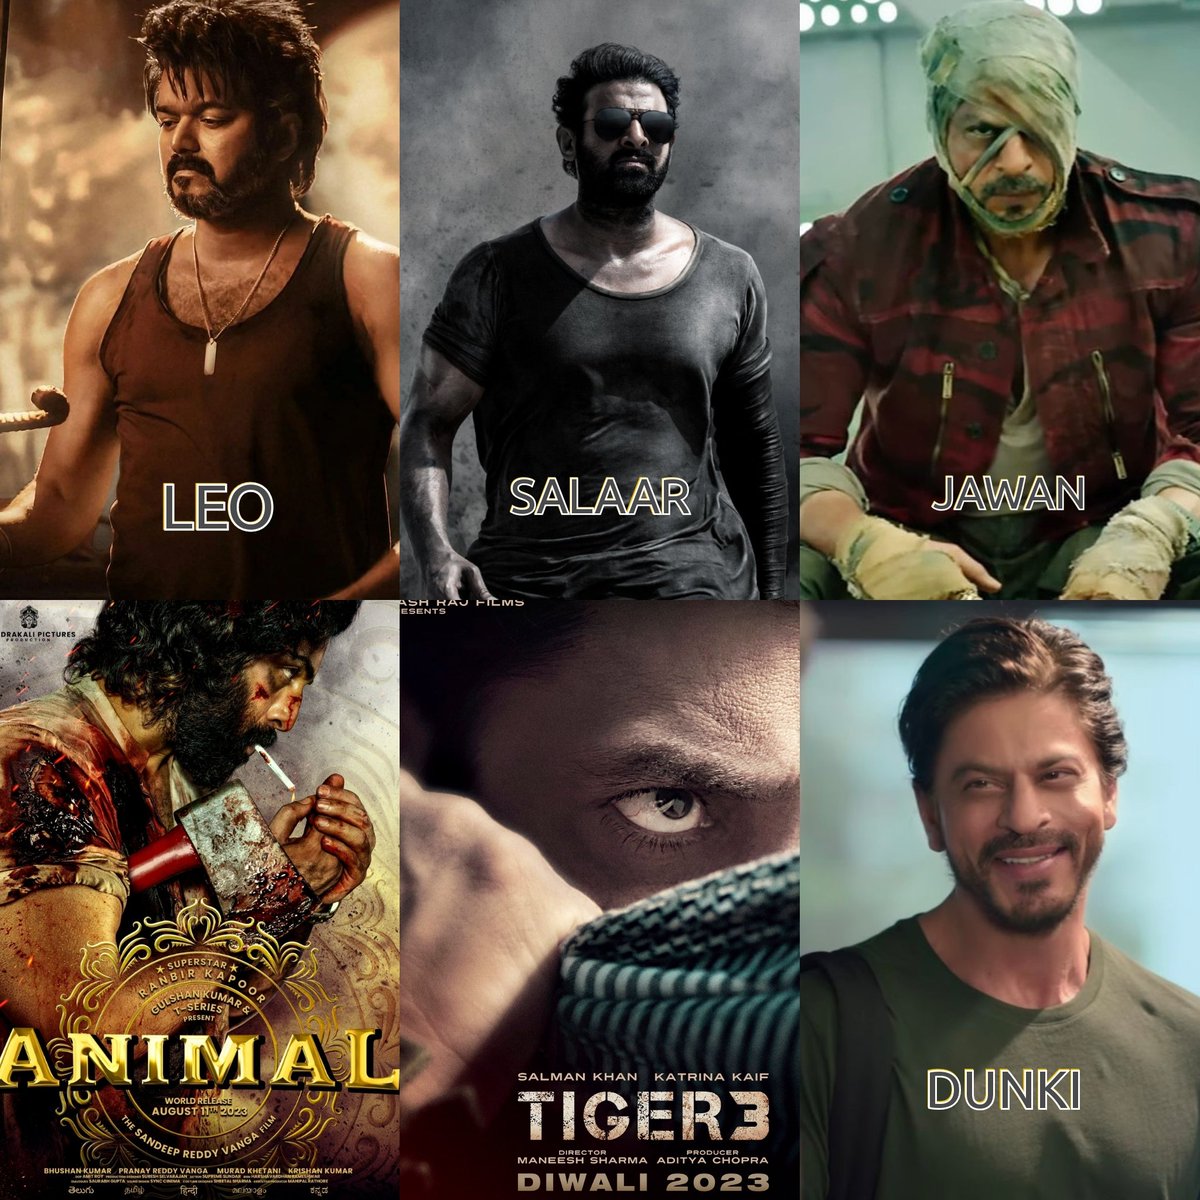 Next 1000cr Collection Movie.. 

#Leo #Salaar #Jawan #Animal #Tiger3 #Dunki #SalmanKhan #Prabhas #Vijay #ShahRukhKhan #RanbirKapoor #ThalapathyVijay